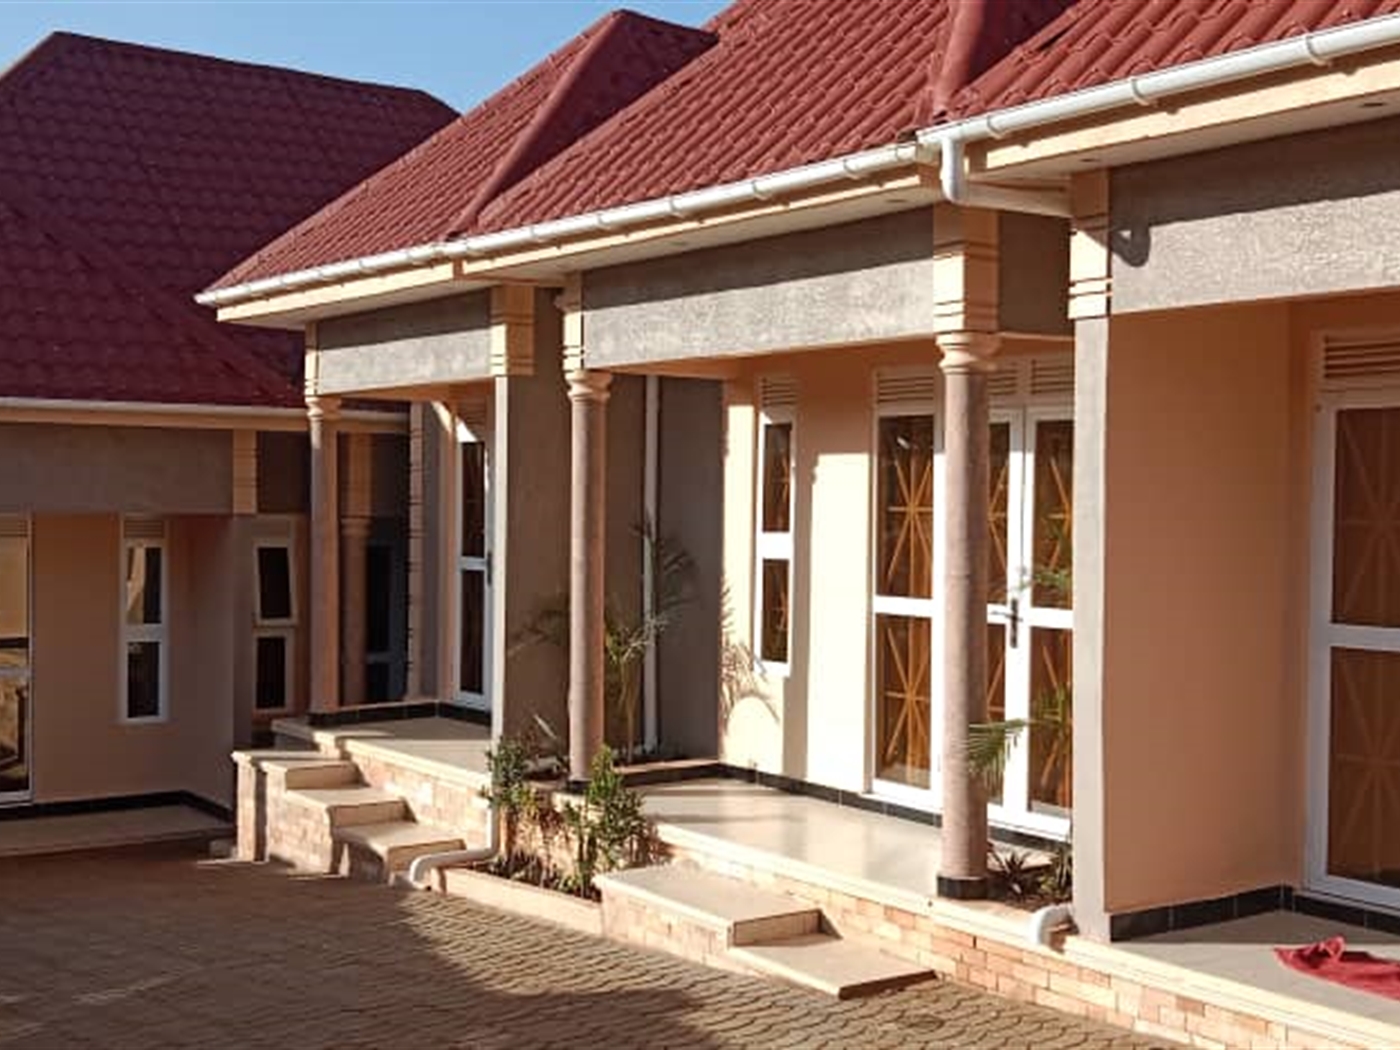 Rental units for sale in Kiwaatule Kampala